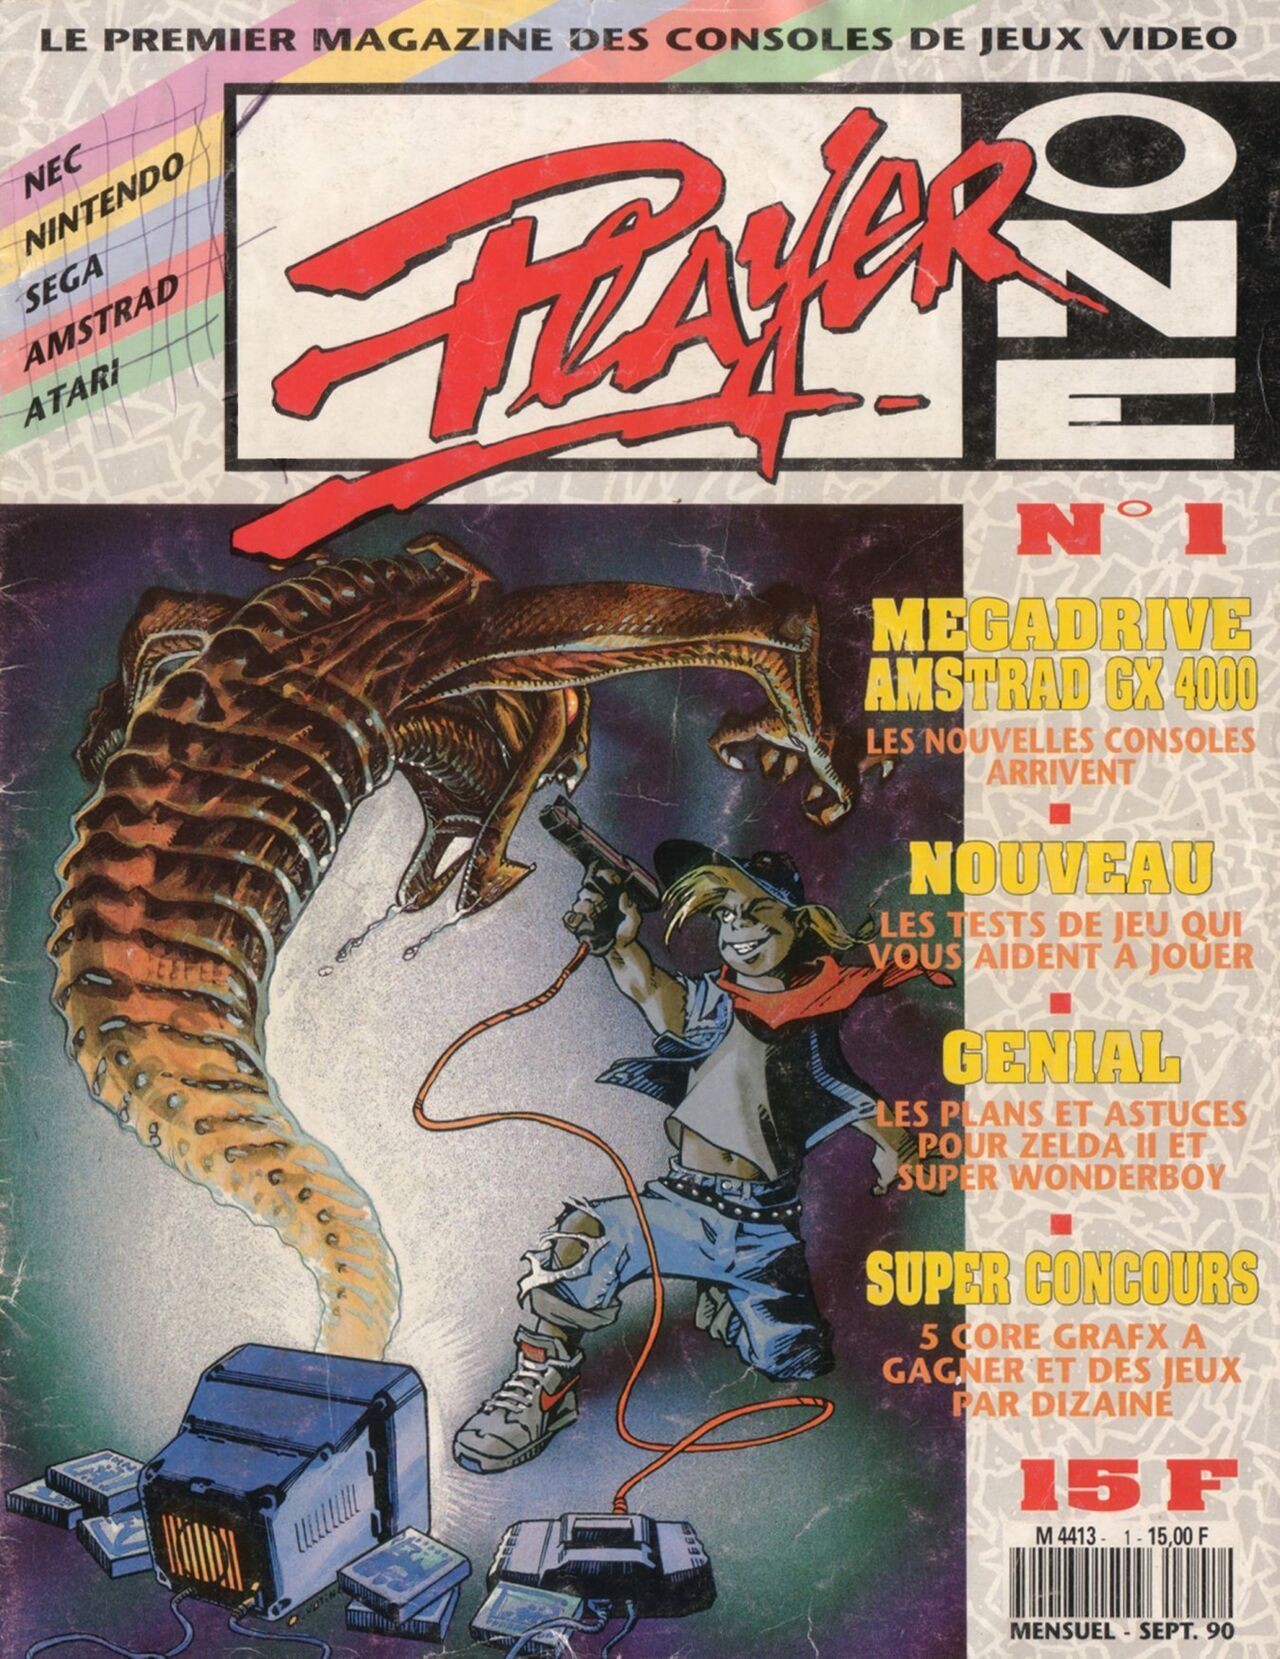 Tight Magazine - Player One 001 (September 1990) Tiny